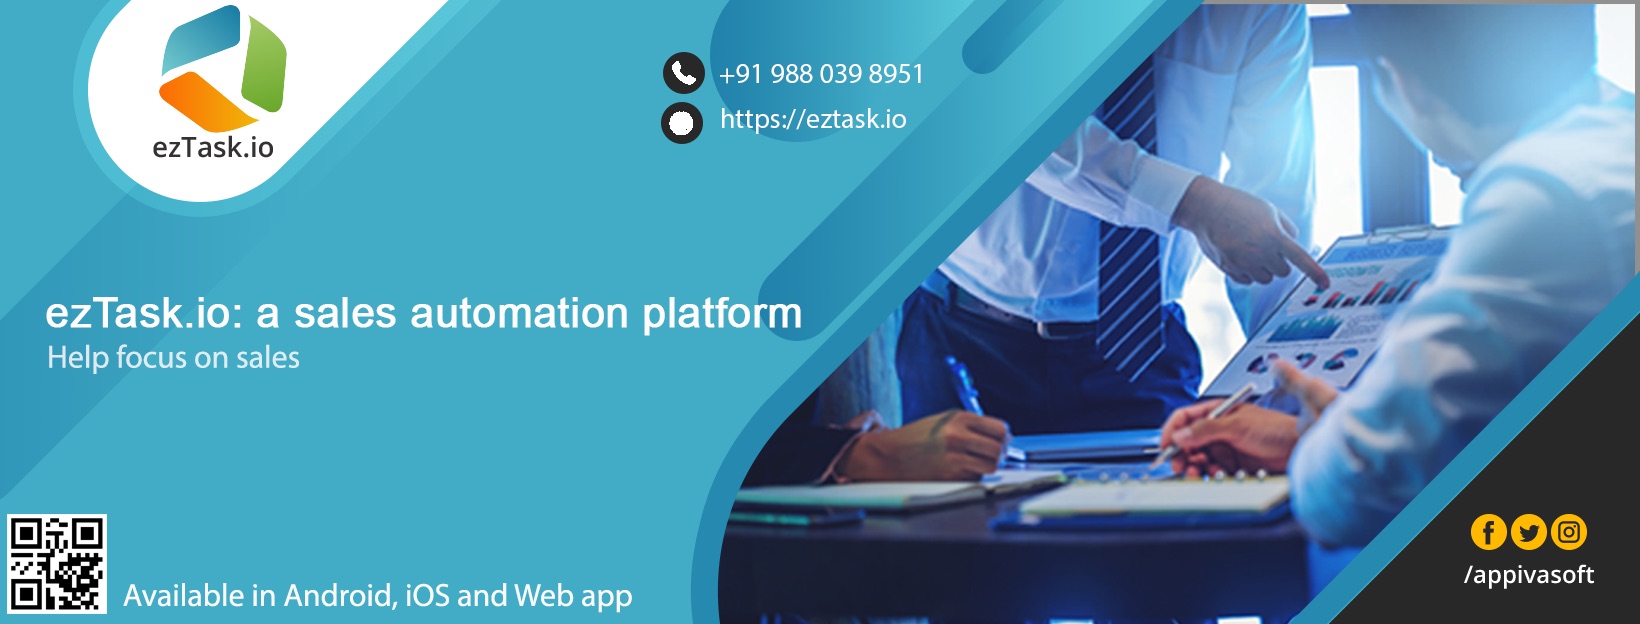 ezTask.io a sales automation platform